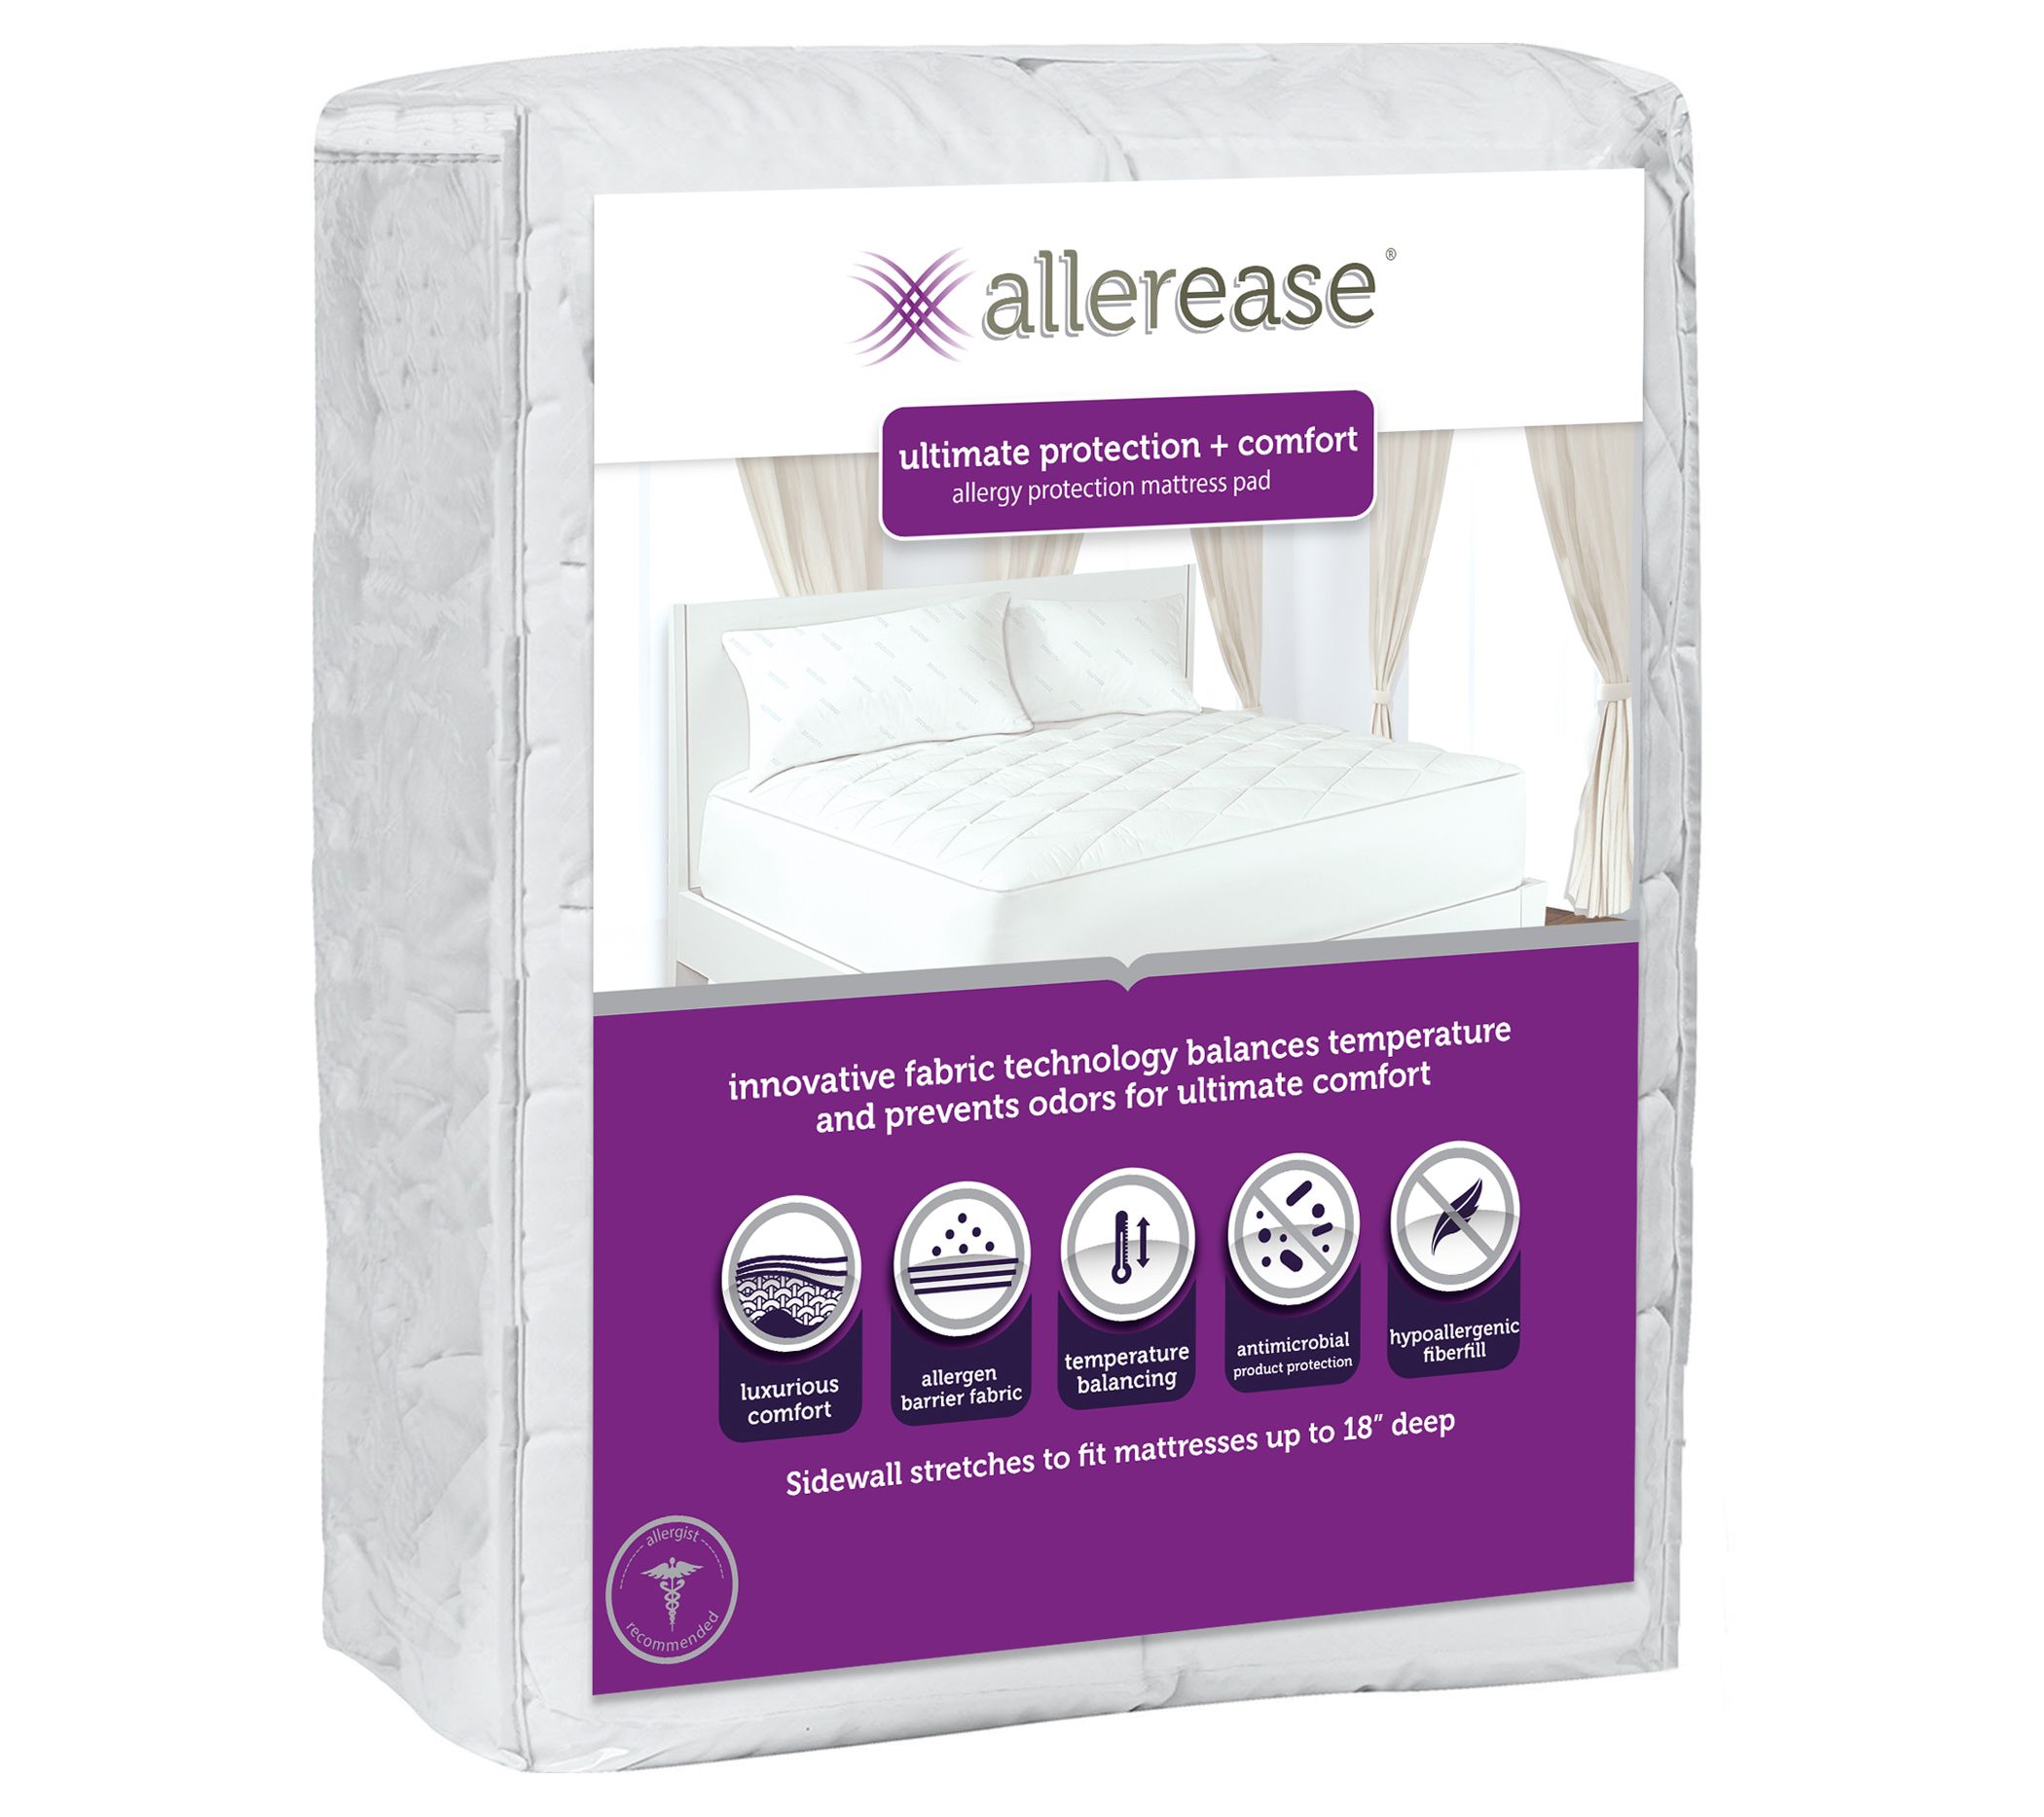  AllerEase Waterproof Mattress Protector, Maximum Allergy Mattress  Protector, Queen Mattress Cover : Home & Kitchen